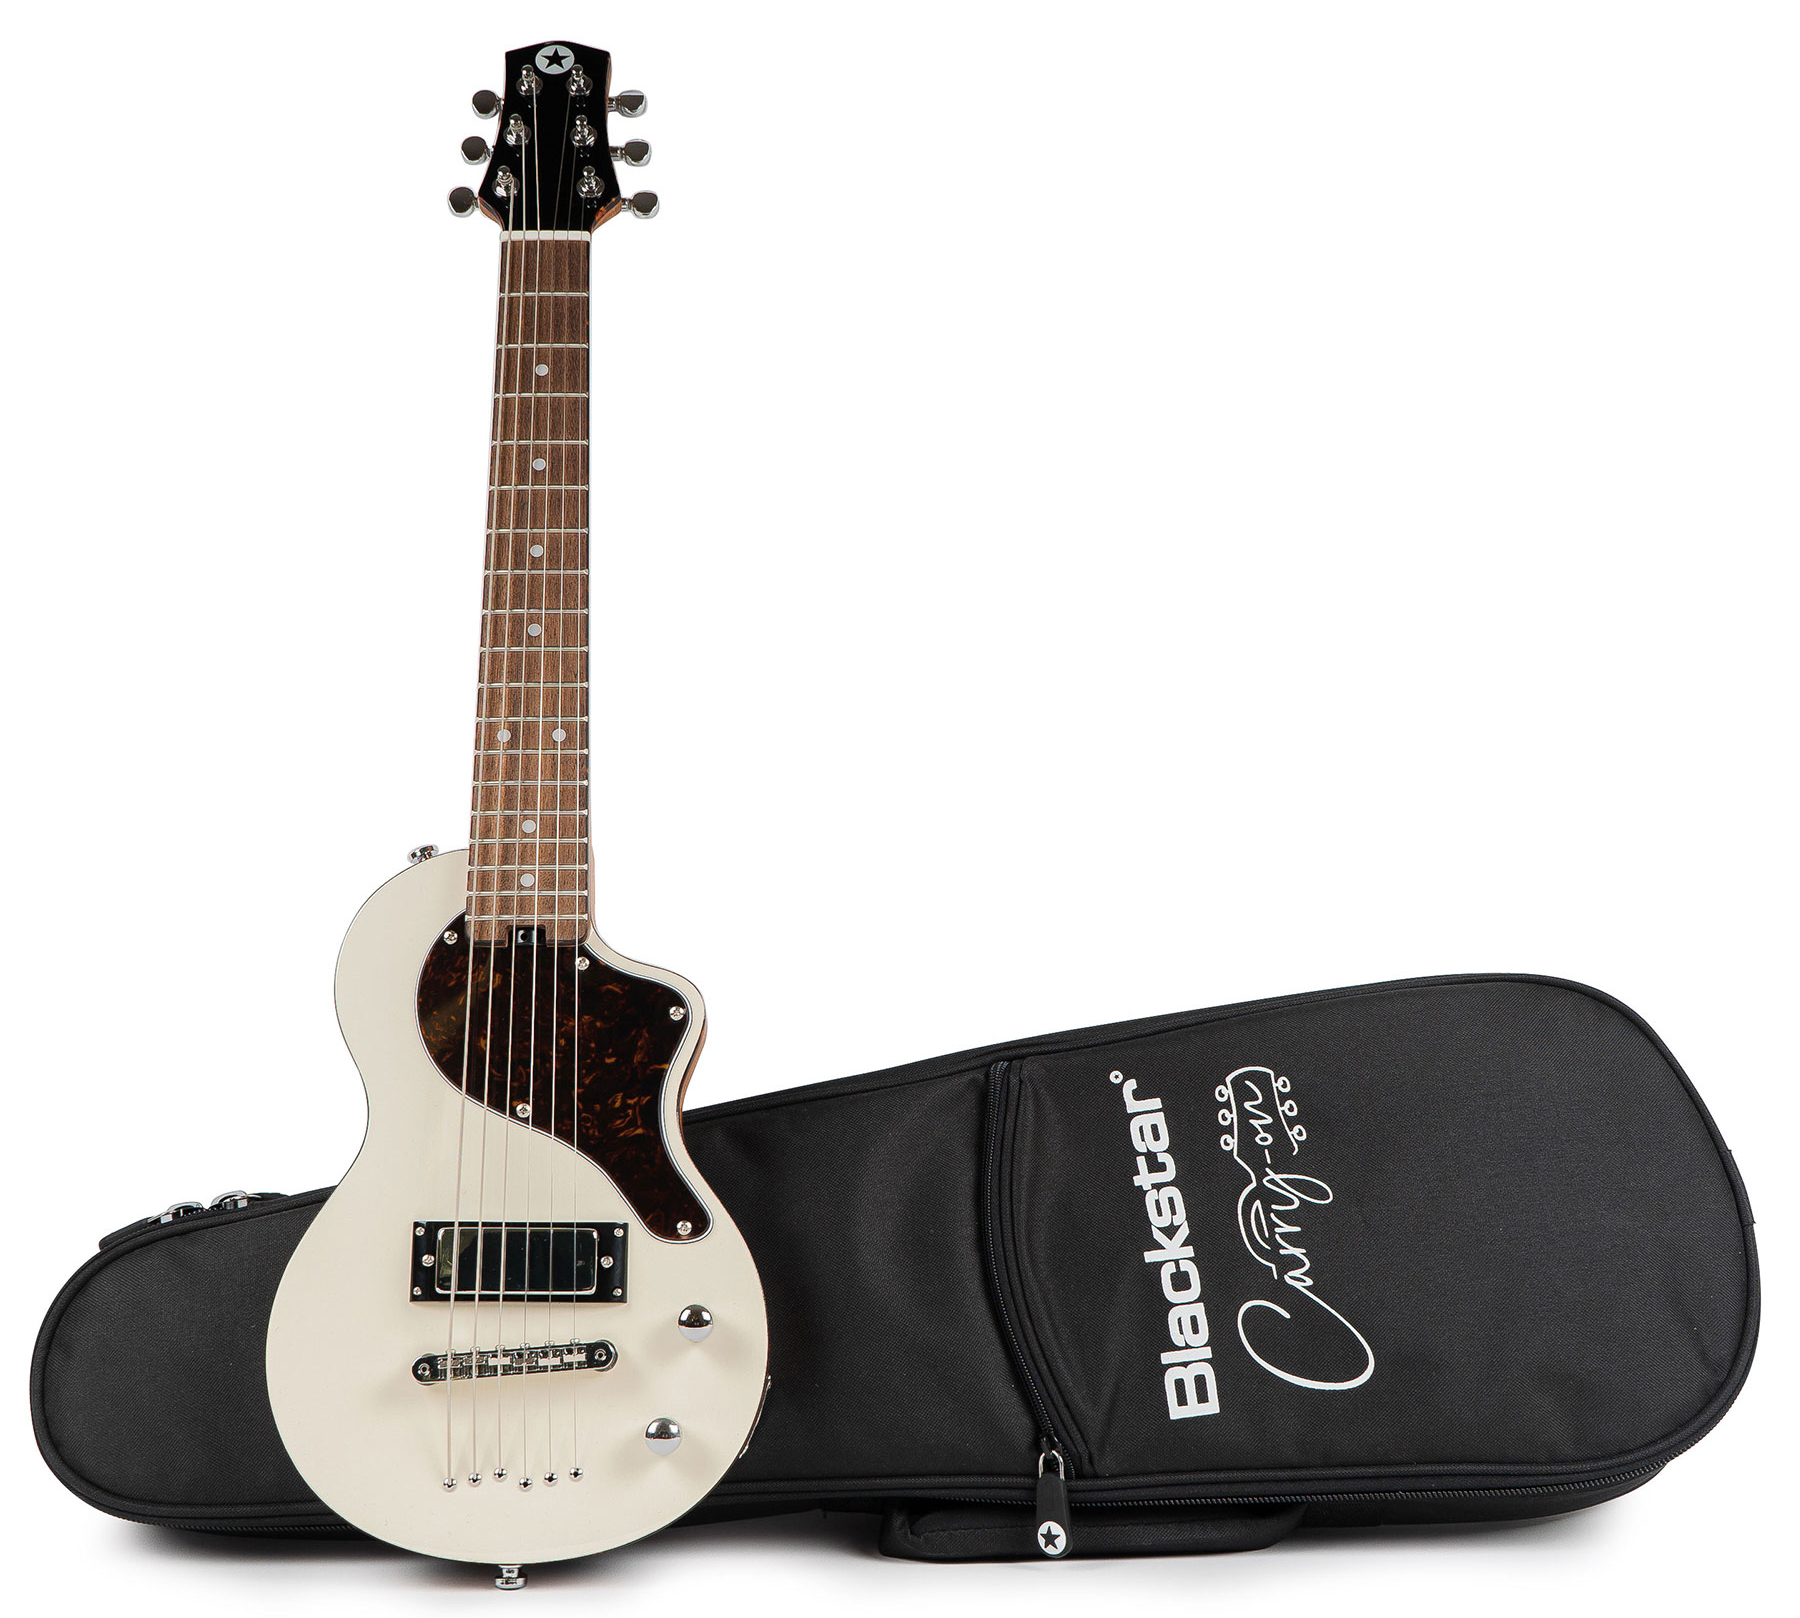 Blackstar Carry-on Travel Guitar +housse - White - Travel & mini electric guitar - Variation 5